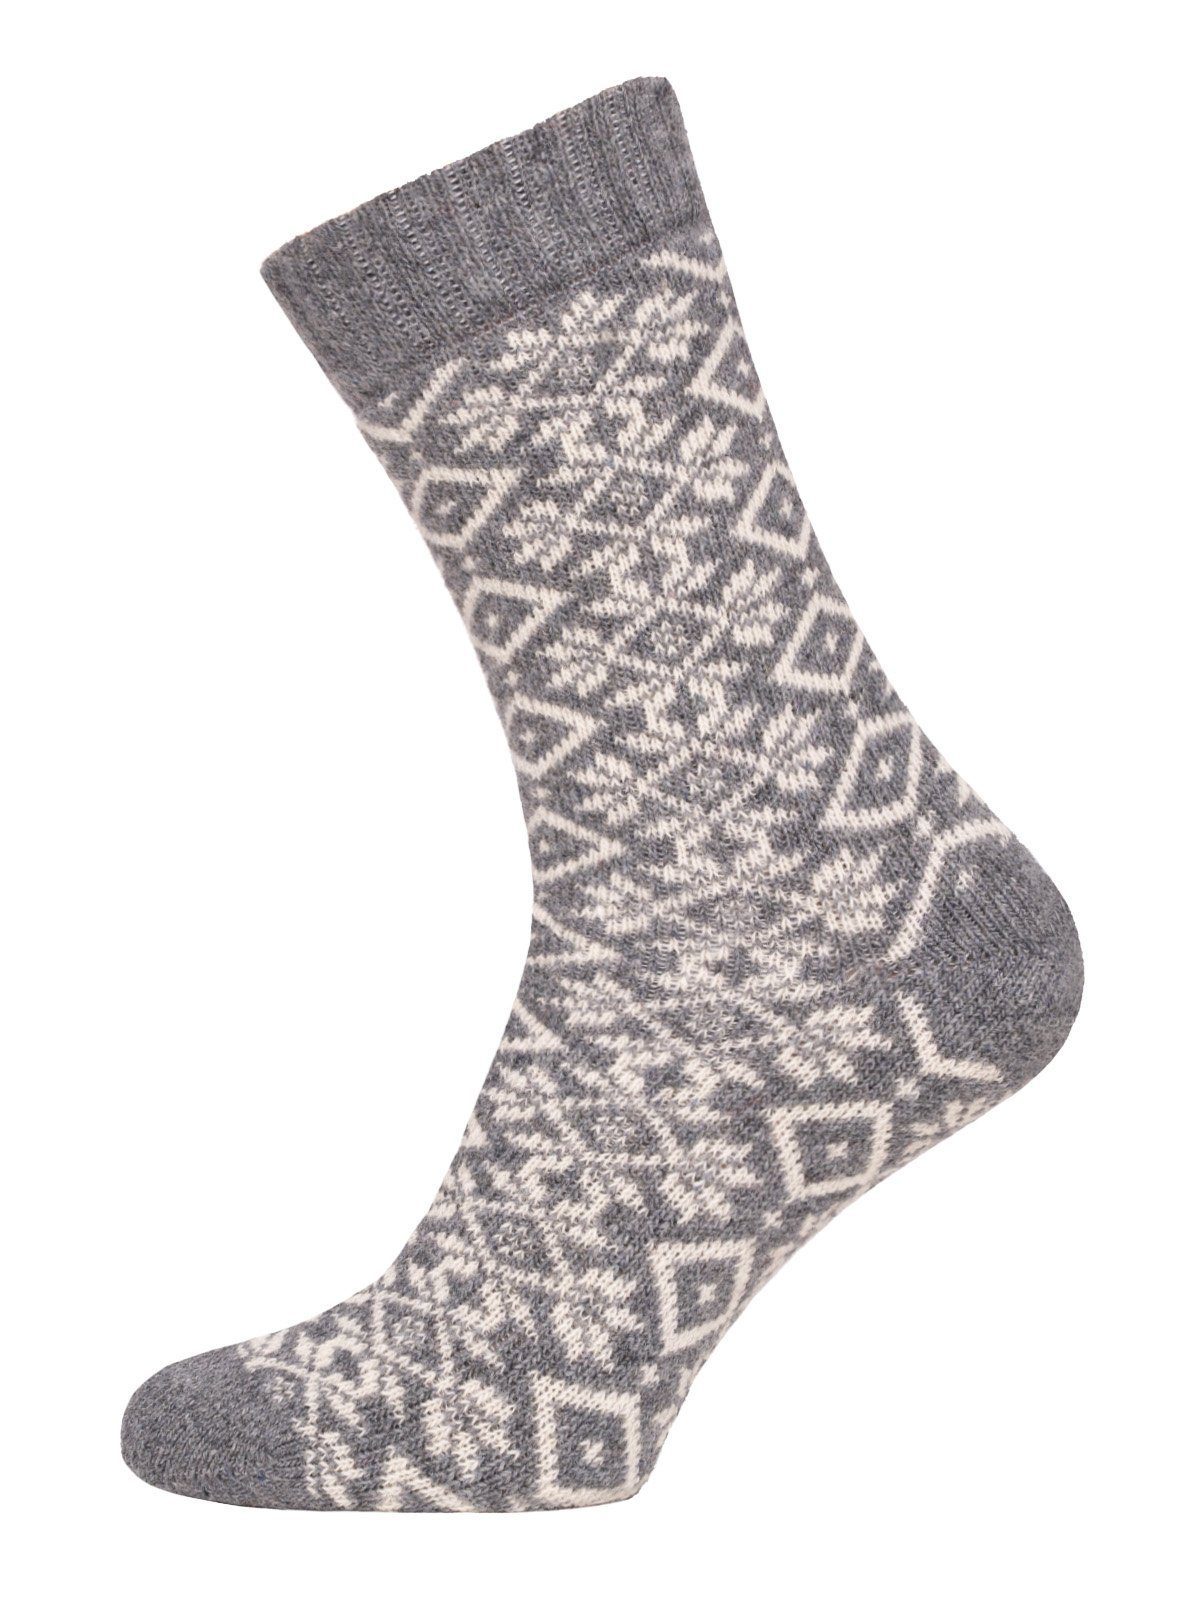 Mit HomeOfSocks Grau In 45% Wollanteil Design Socken Bunten Socken Hyggelig Für Damen Socken Hygge Dick Hohem Wolle & Dicke Herren Warm mit